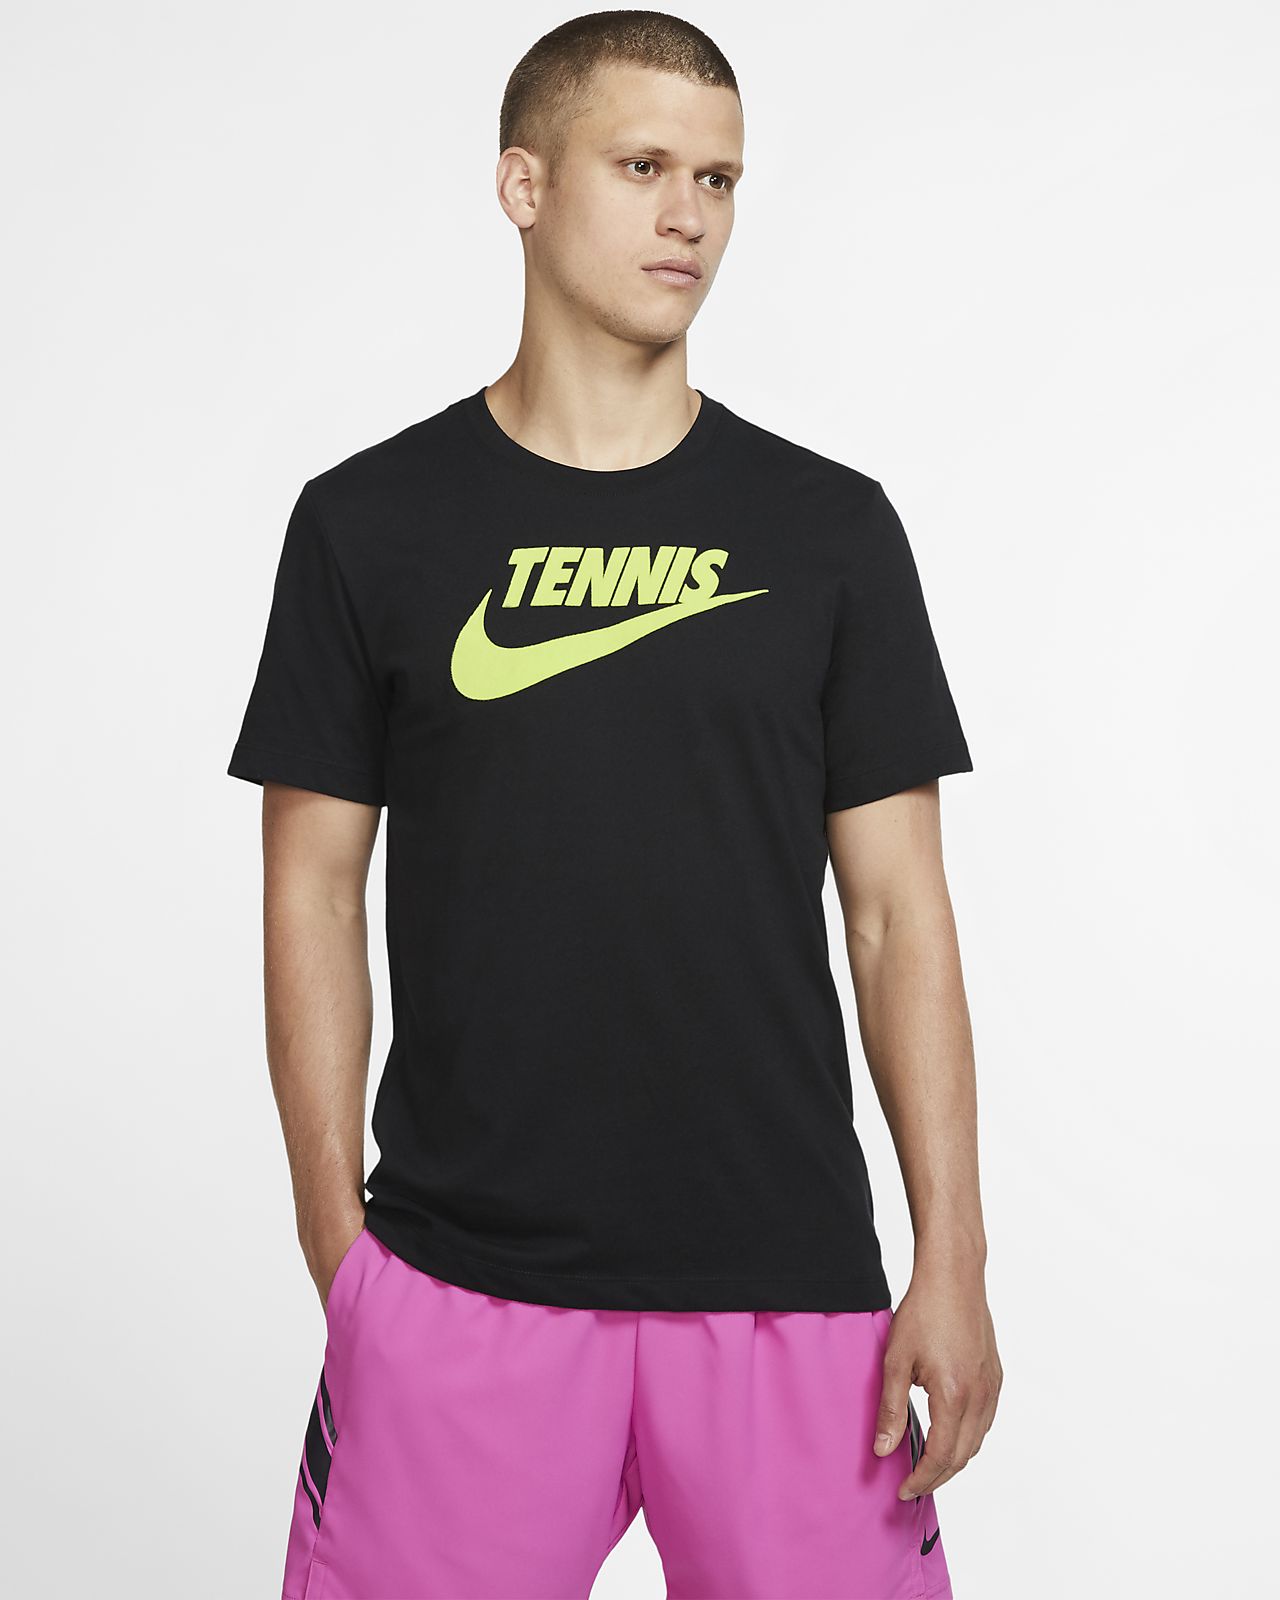 nike tennis shirt